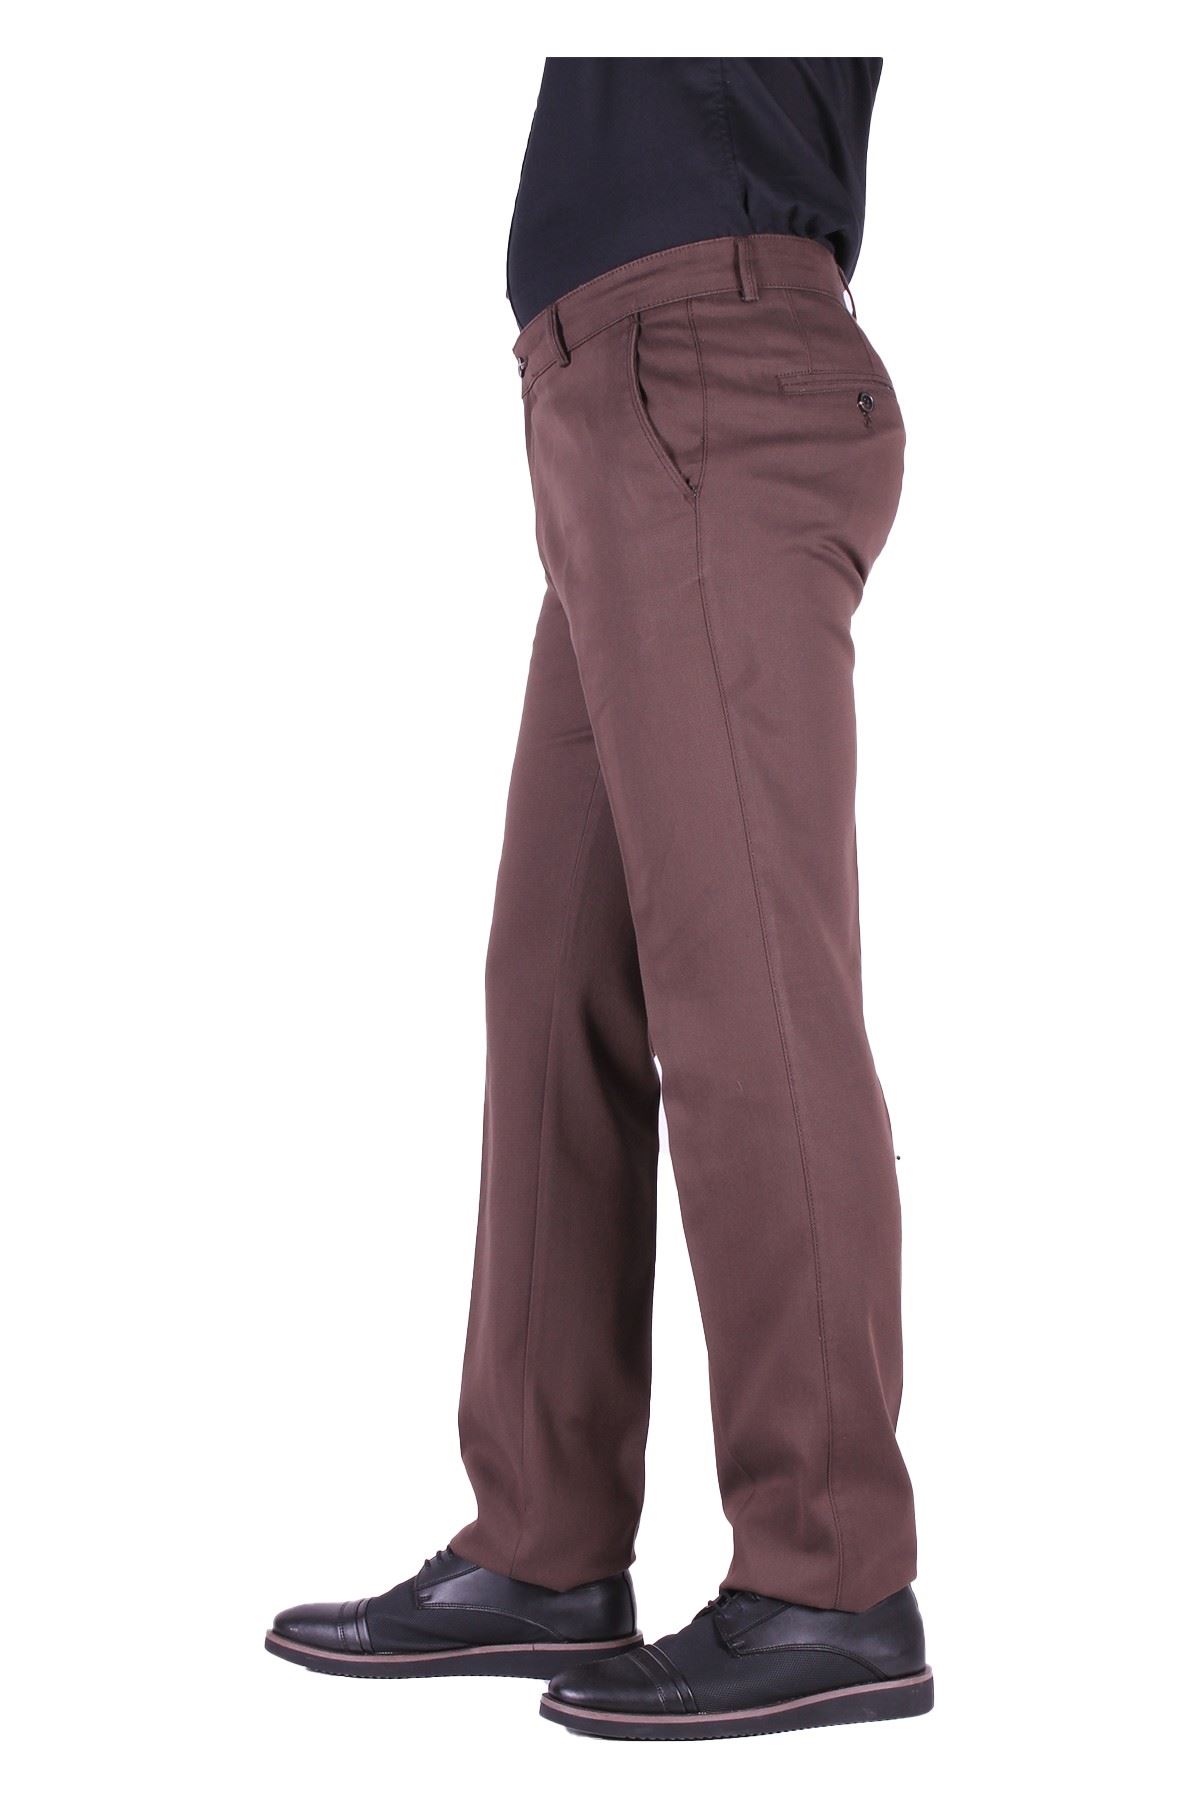 Giyinsen Erkek Kahverengi Klasik Pantolon - 23KI53008006